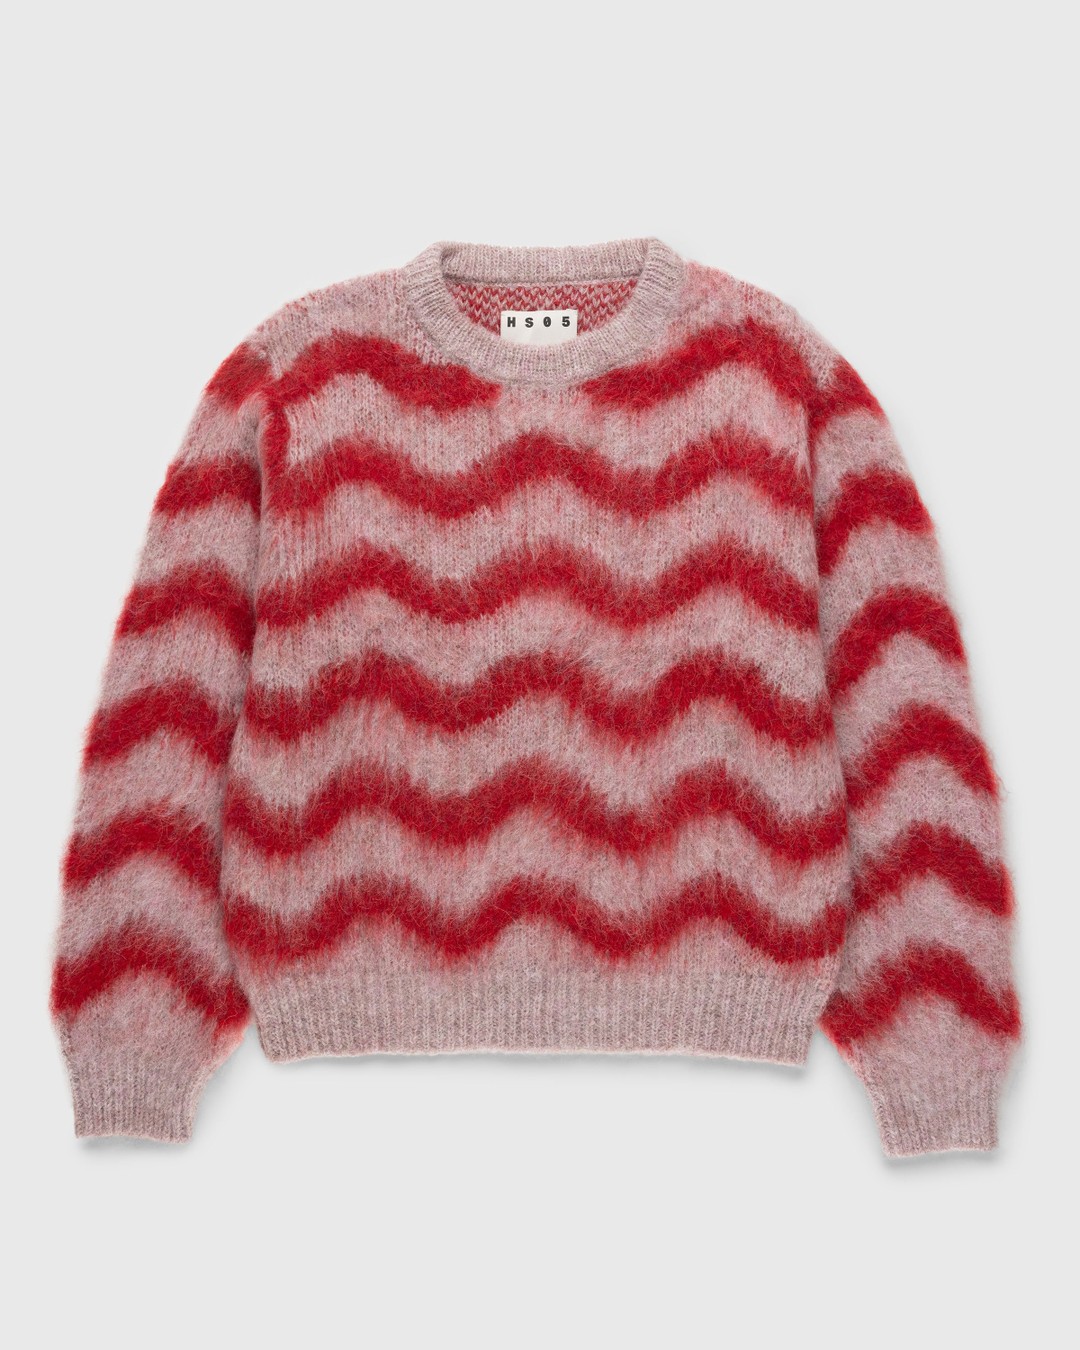 Highsnobiety HS05 – Alpaca Fuzzy Wave Sweater Pale Rose/Red - Knitwear - Multi - Image 1